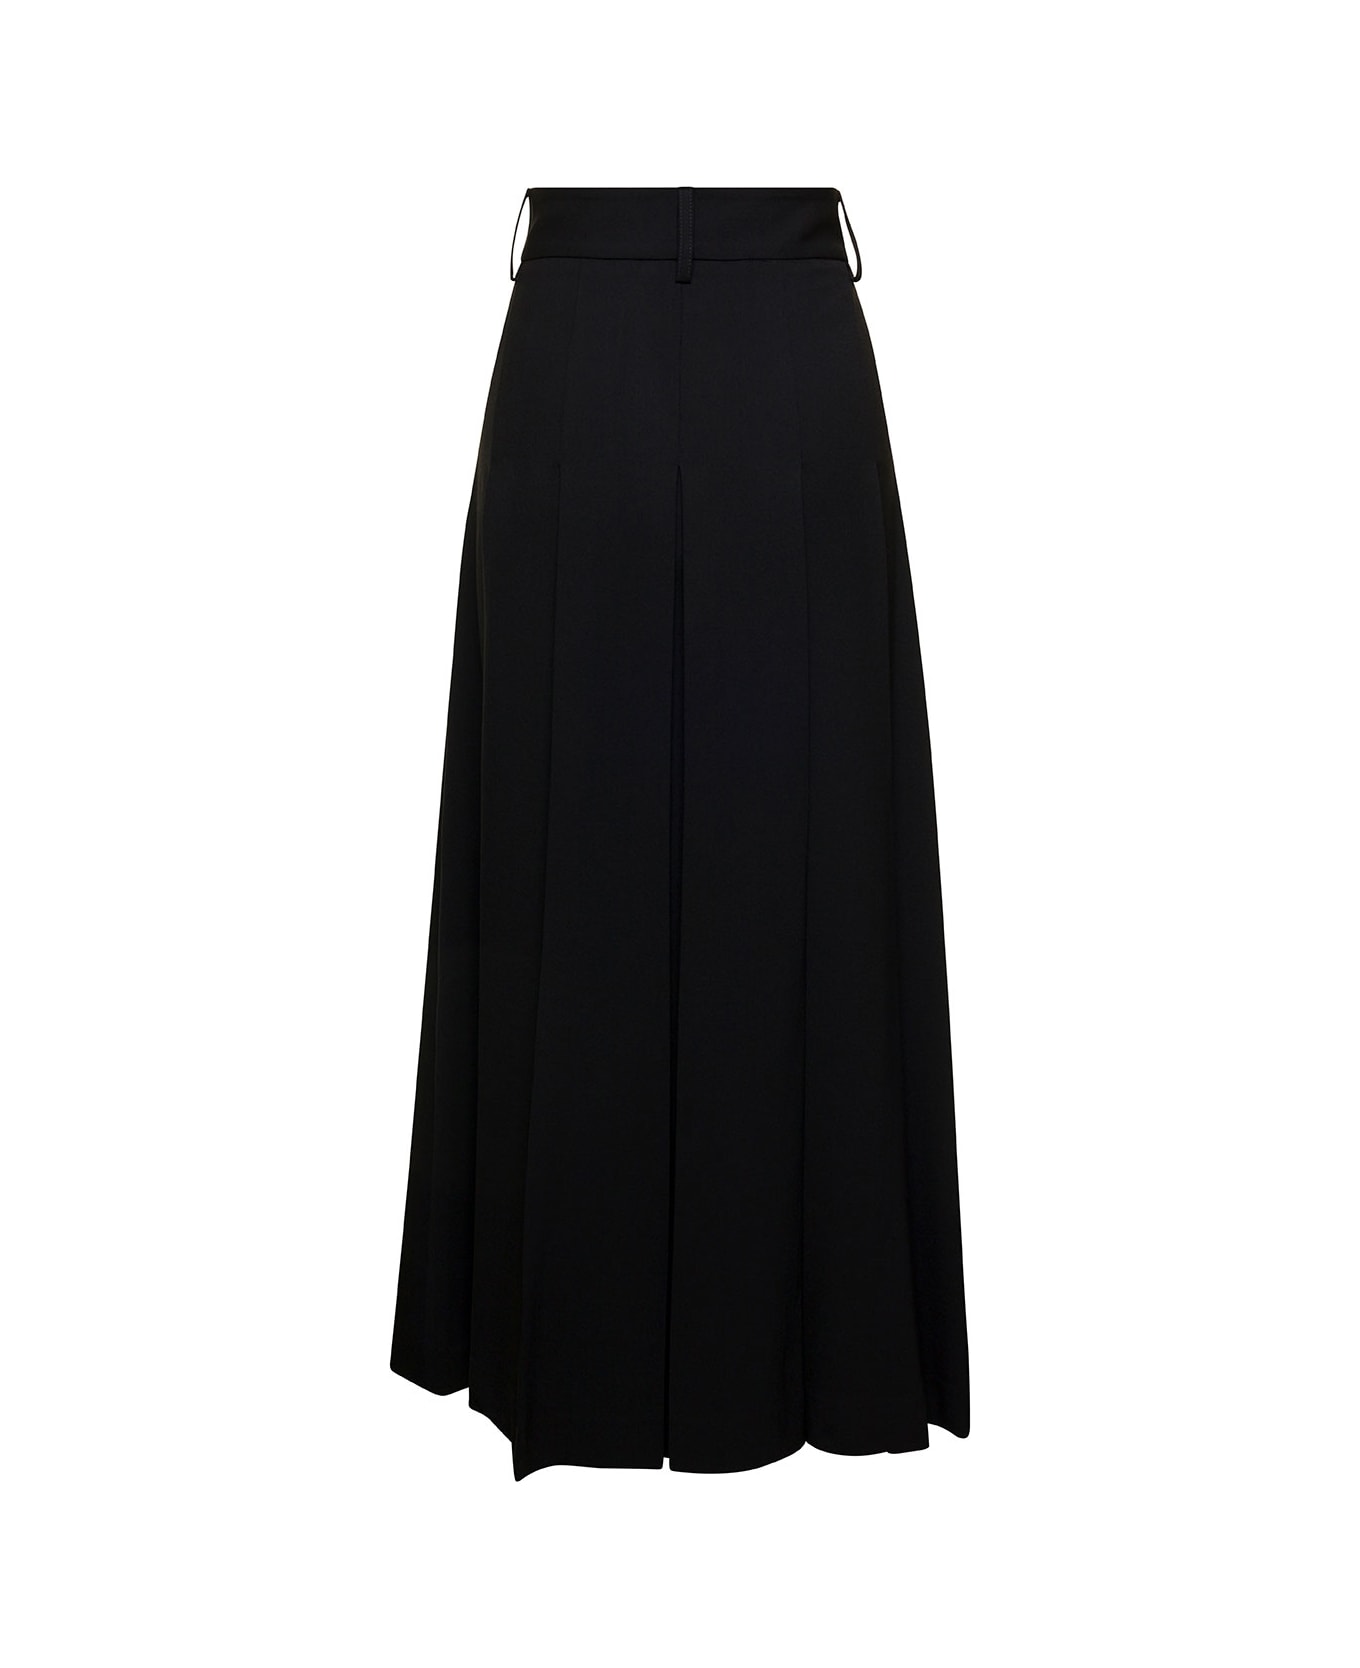 Parosh Long Black Pleated Skirt With Belt Loops In Stretch Wool Woman - Black スカート